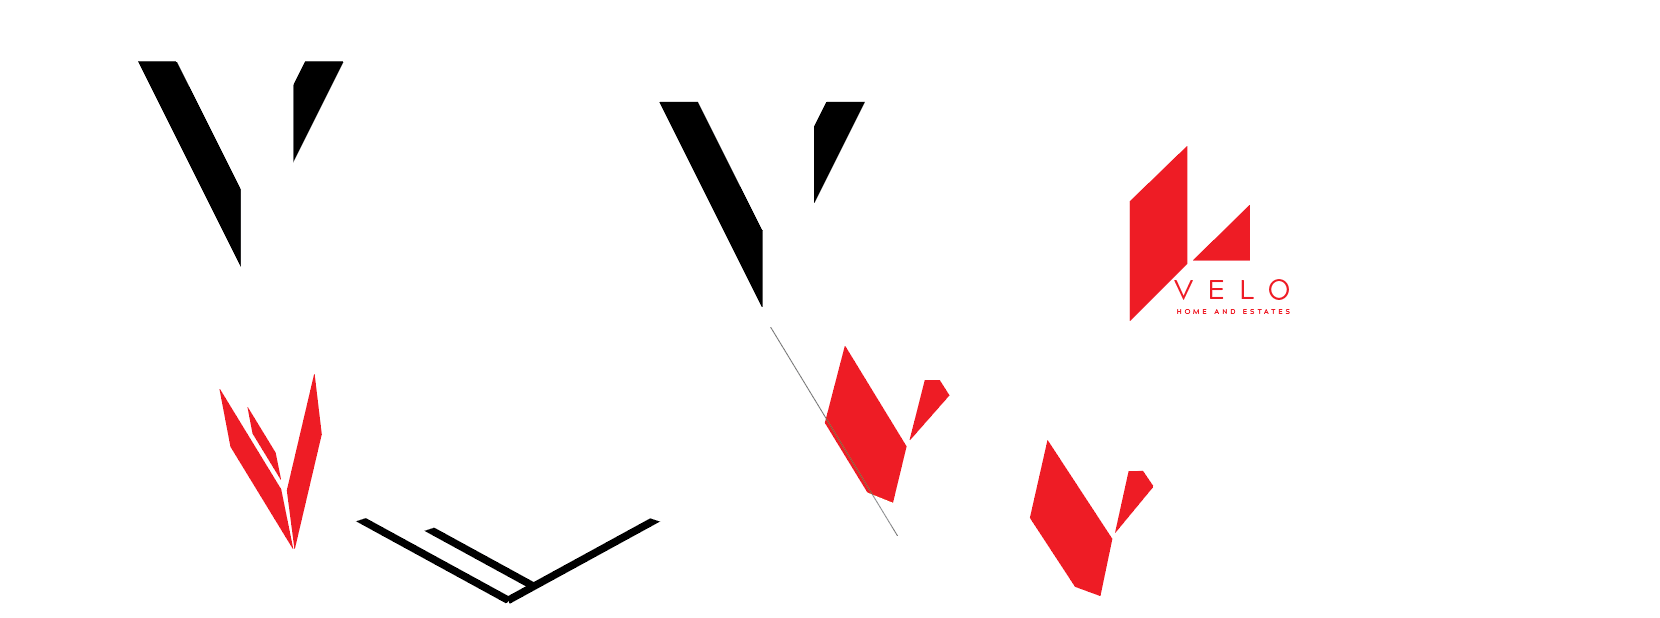 velo-logo-workspace-austin-belisle-3.png